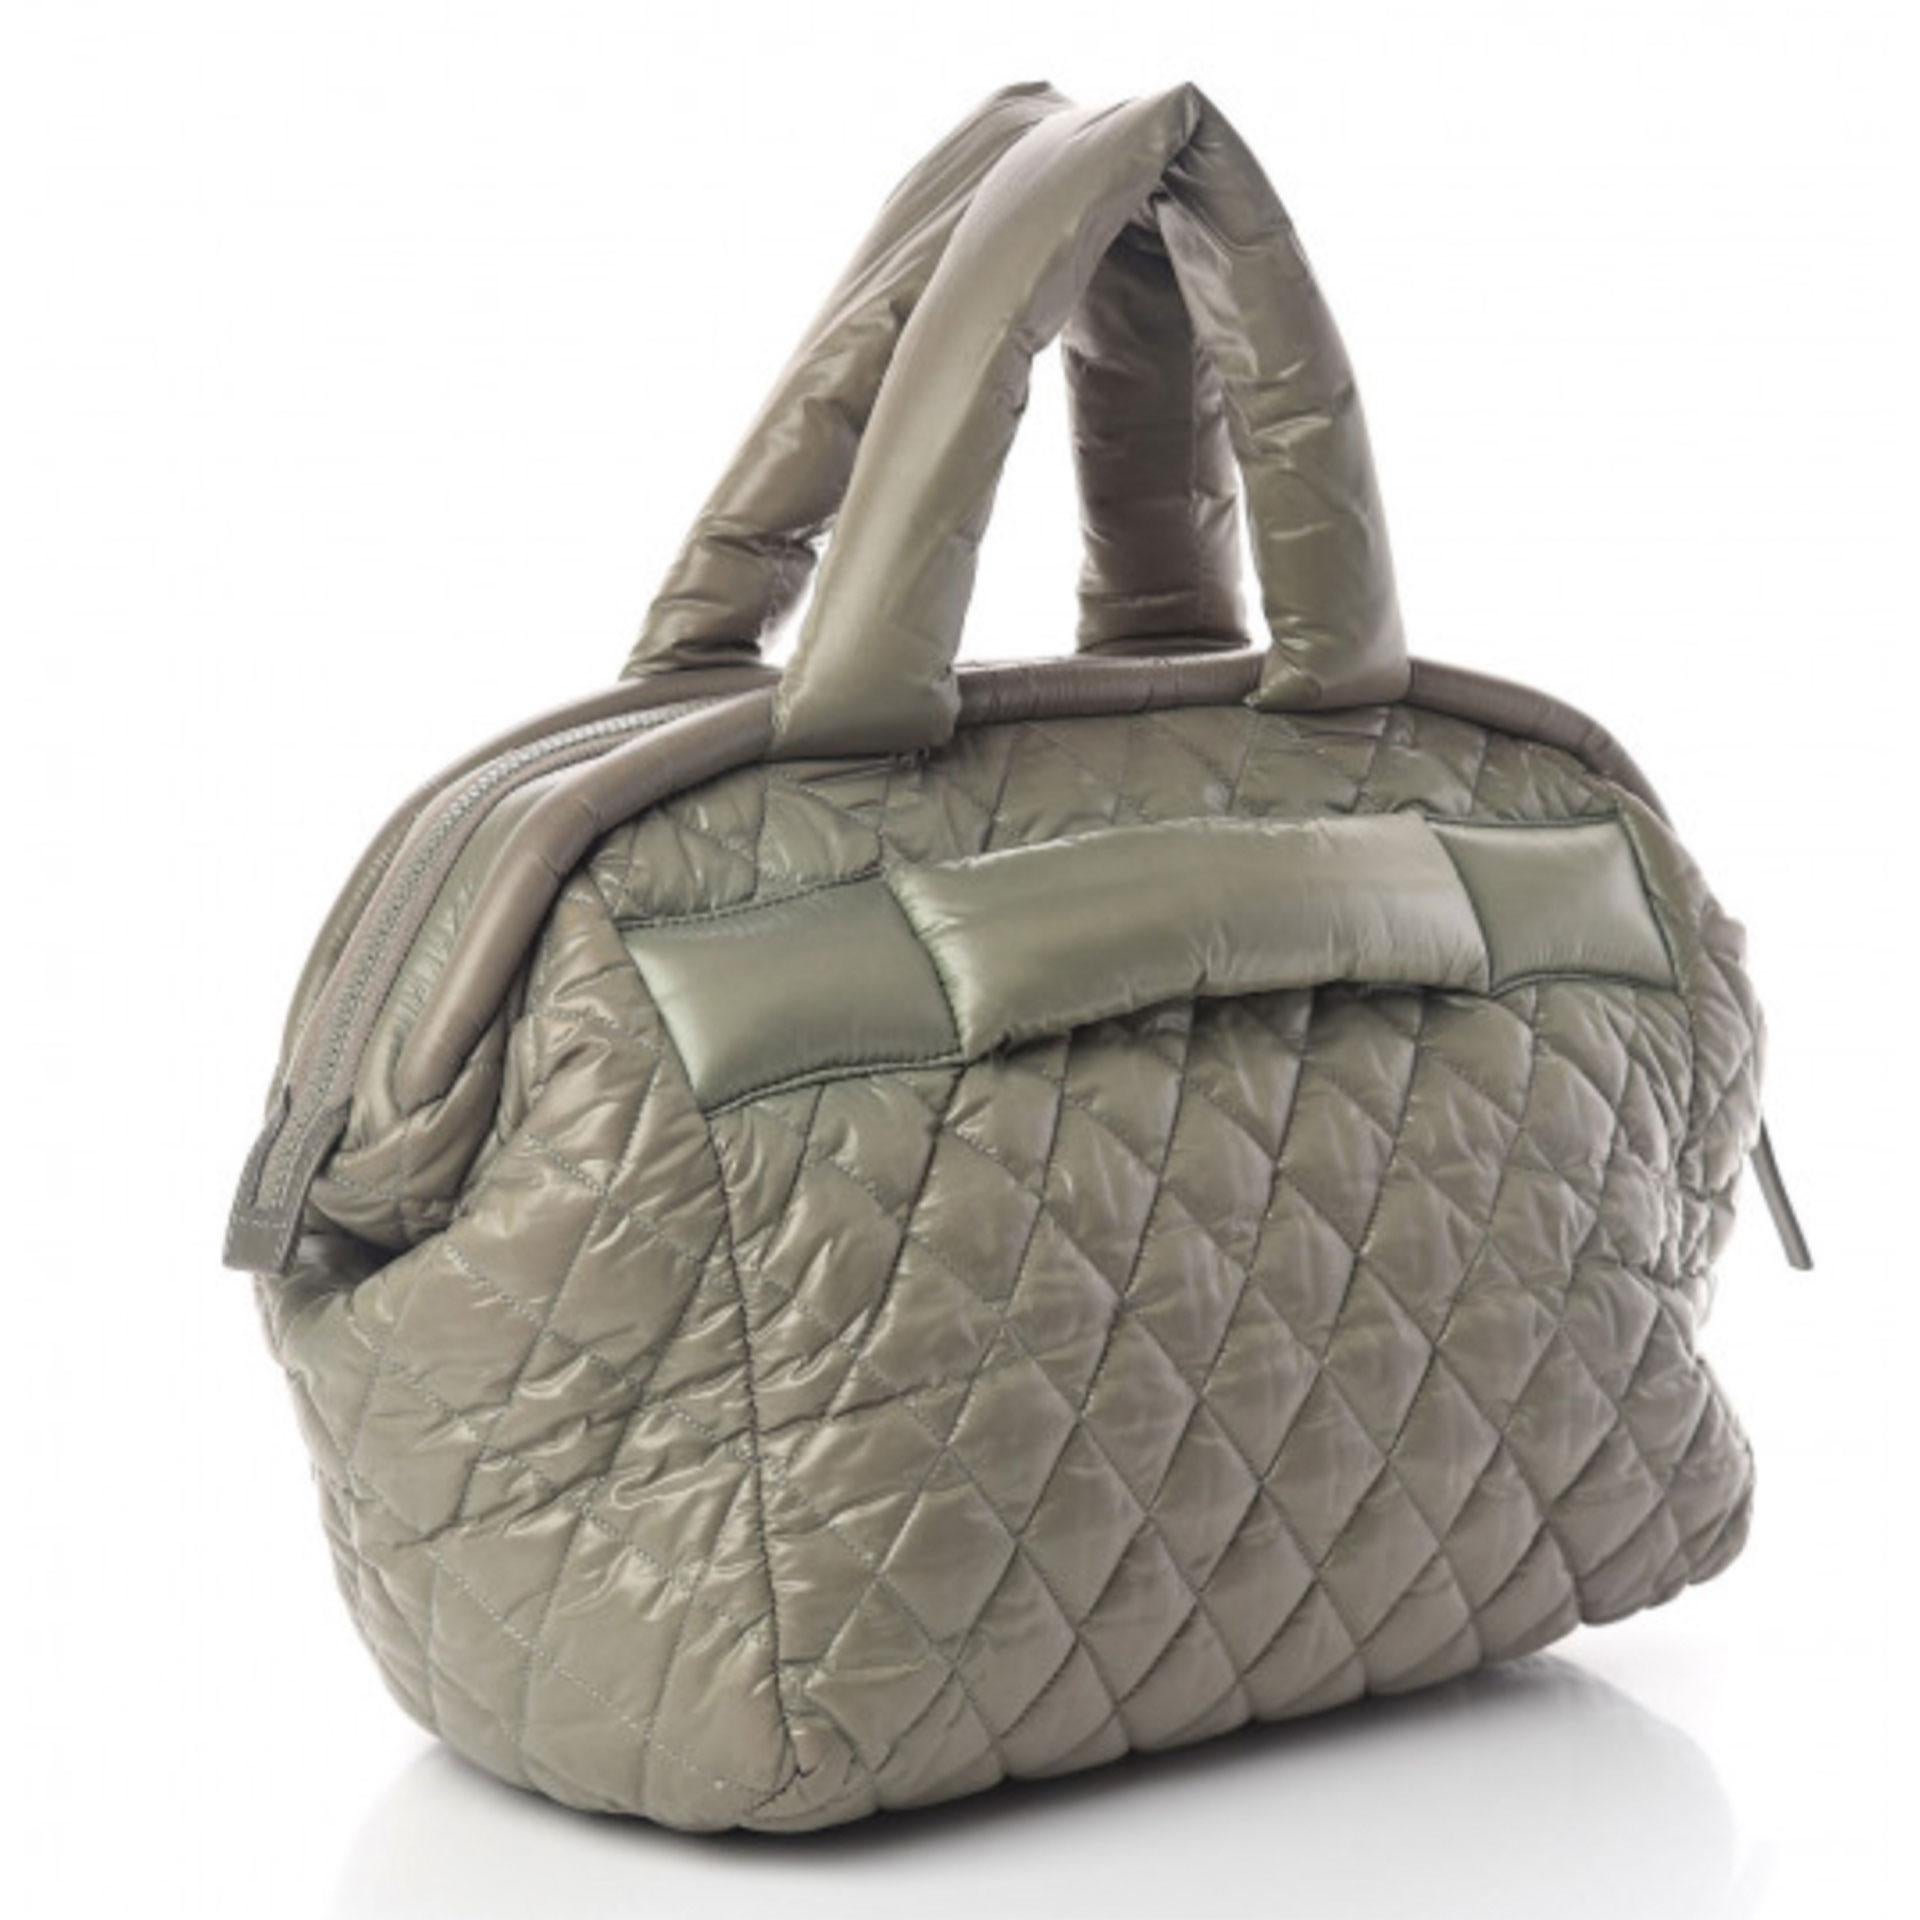 Chanel Vintage Grüne gesteppte Coco Cocoon Bowler Carry On Travel Tote Bag aus Nylon (Grau) im Angebot